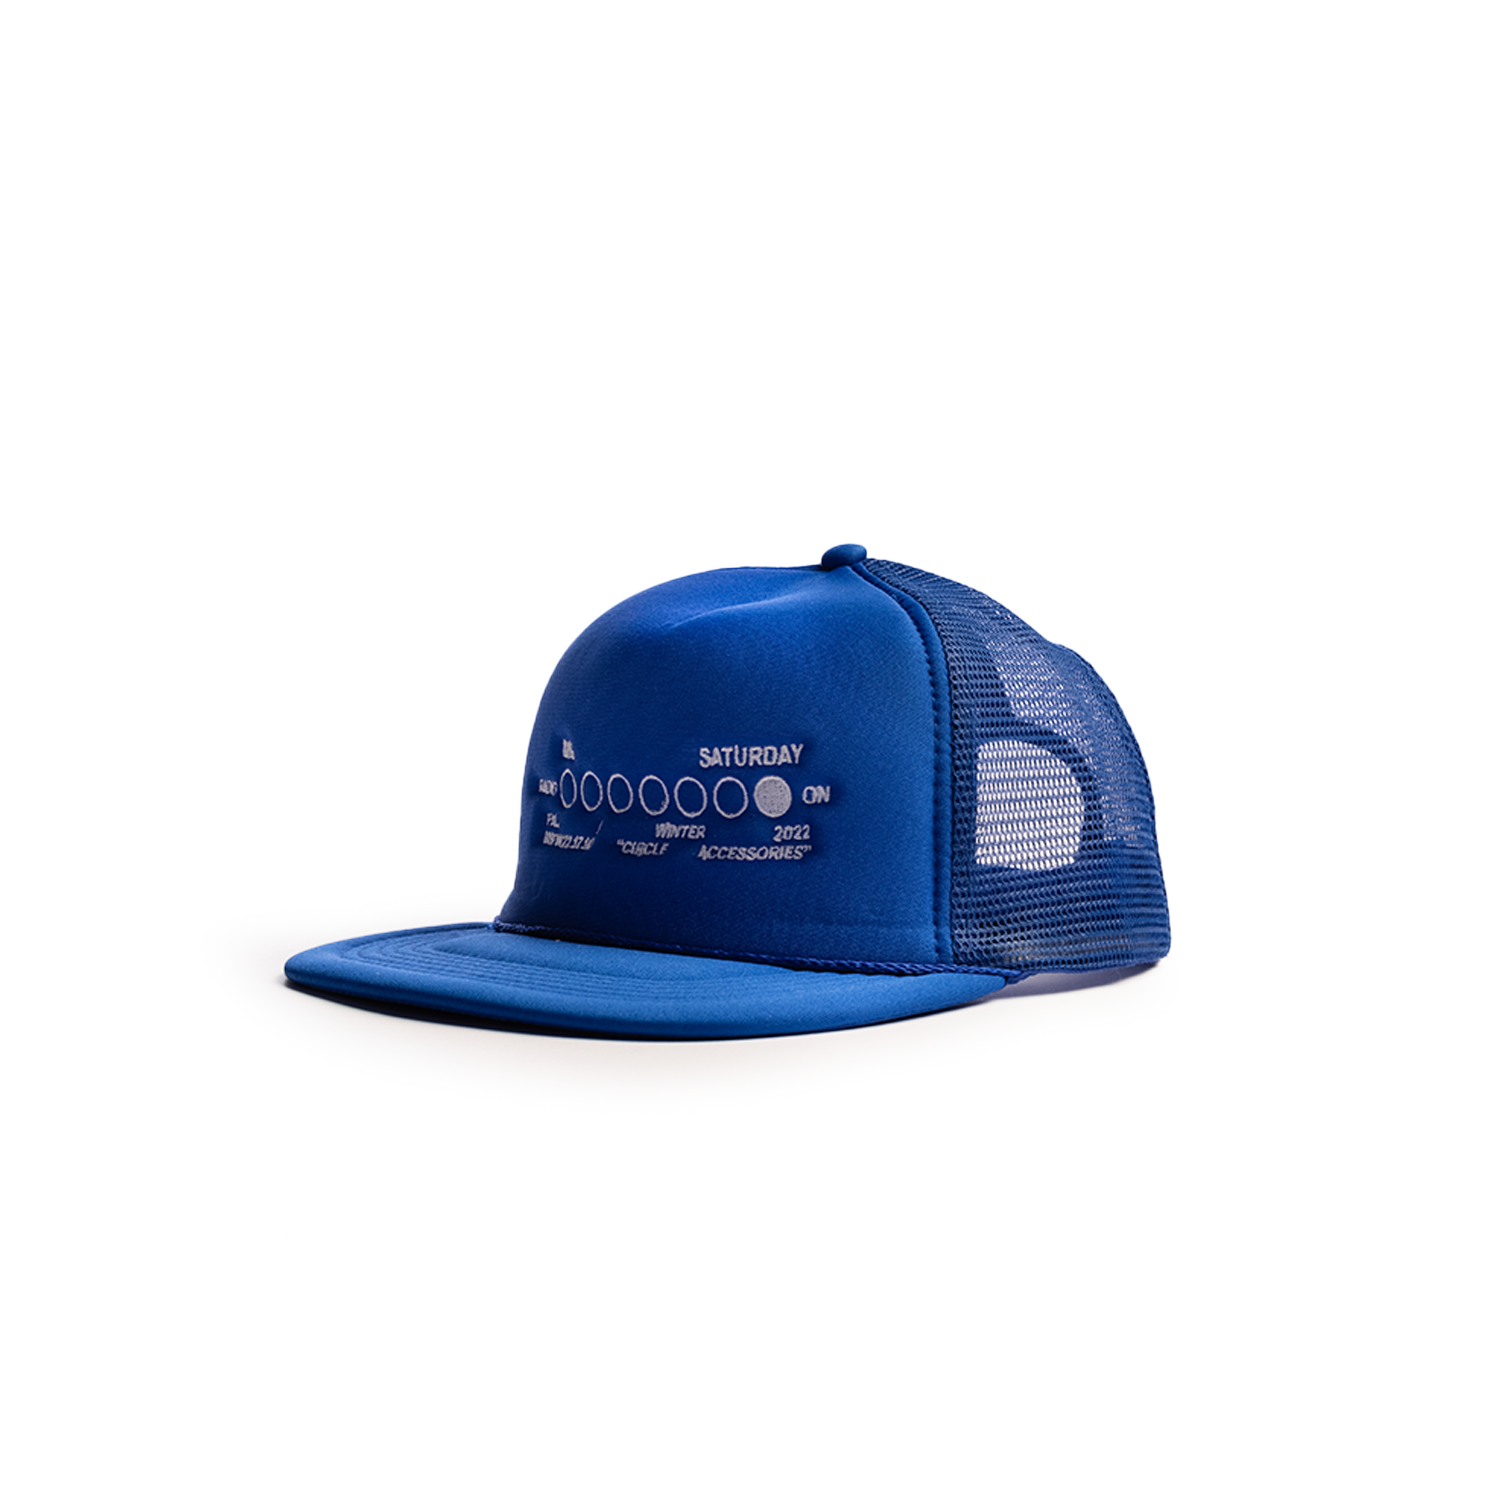 MR. SATURDAY - Logo Trucker Hat product image